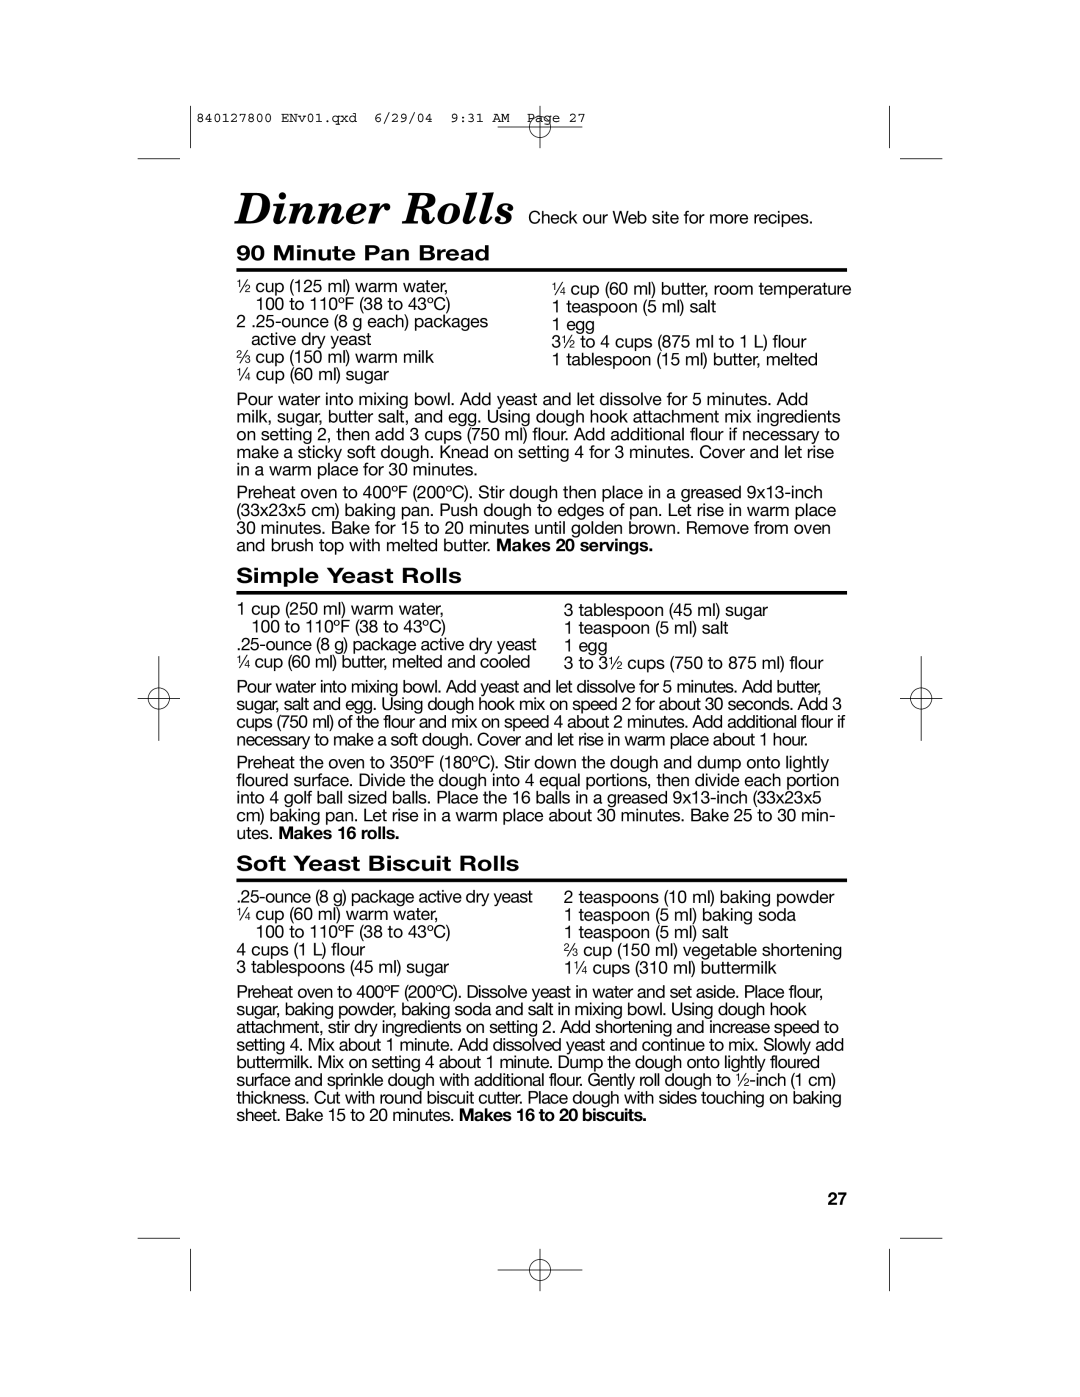 Hamilton Beach 63225 manual Minute Pan Bread, Simple Yeast Rolls, Soft Yeast Biscuit Rolls 